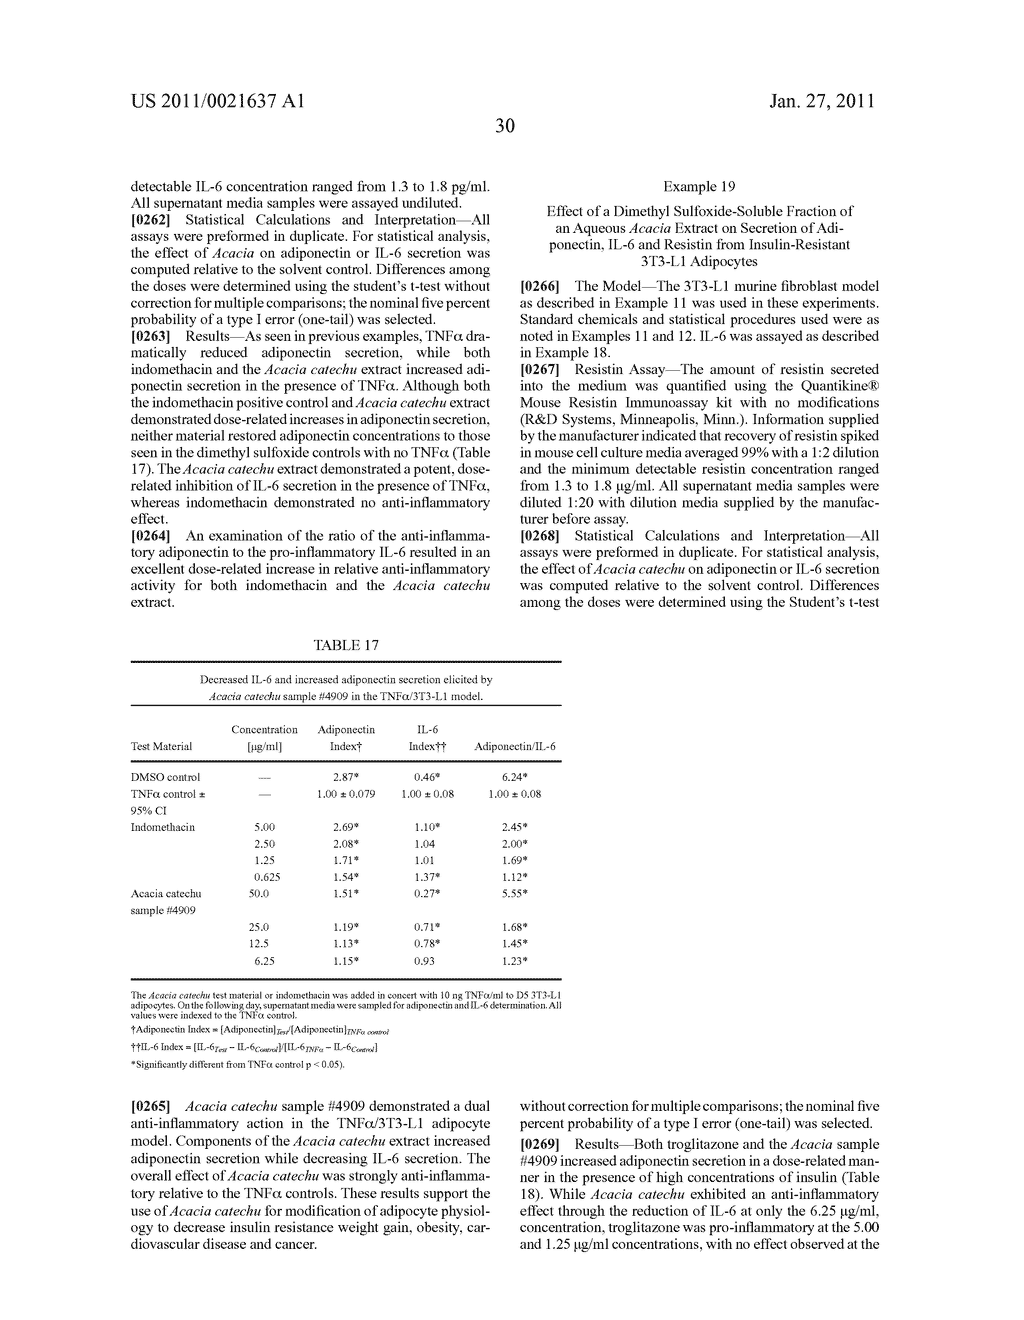 XANTHOHUMOL AND TETRAHYDRO-ISOALPHA ACID BASED PROTEIN KINASE MODULATION CANCER TREATMENT - diagram, schematic, and image 76